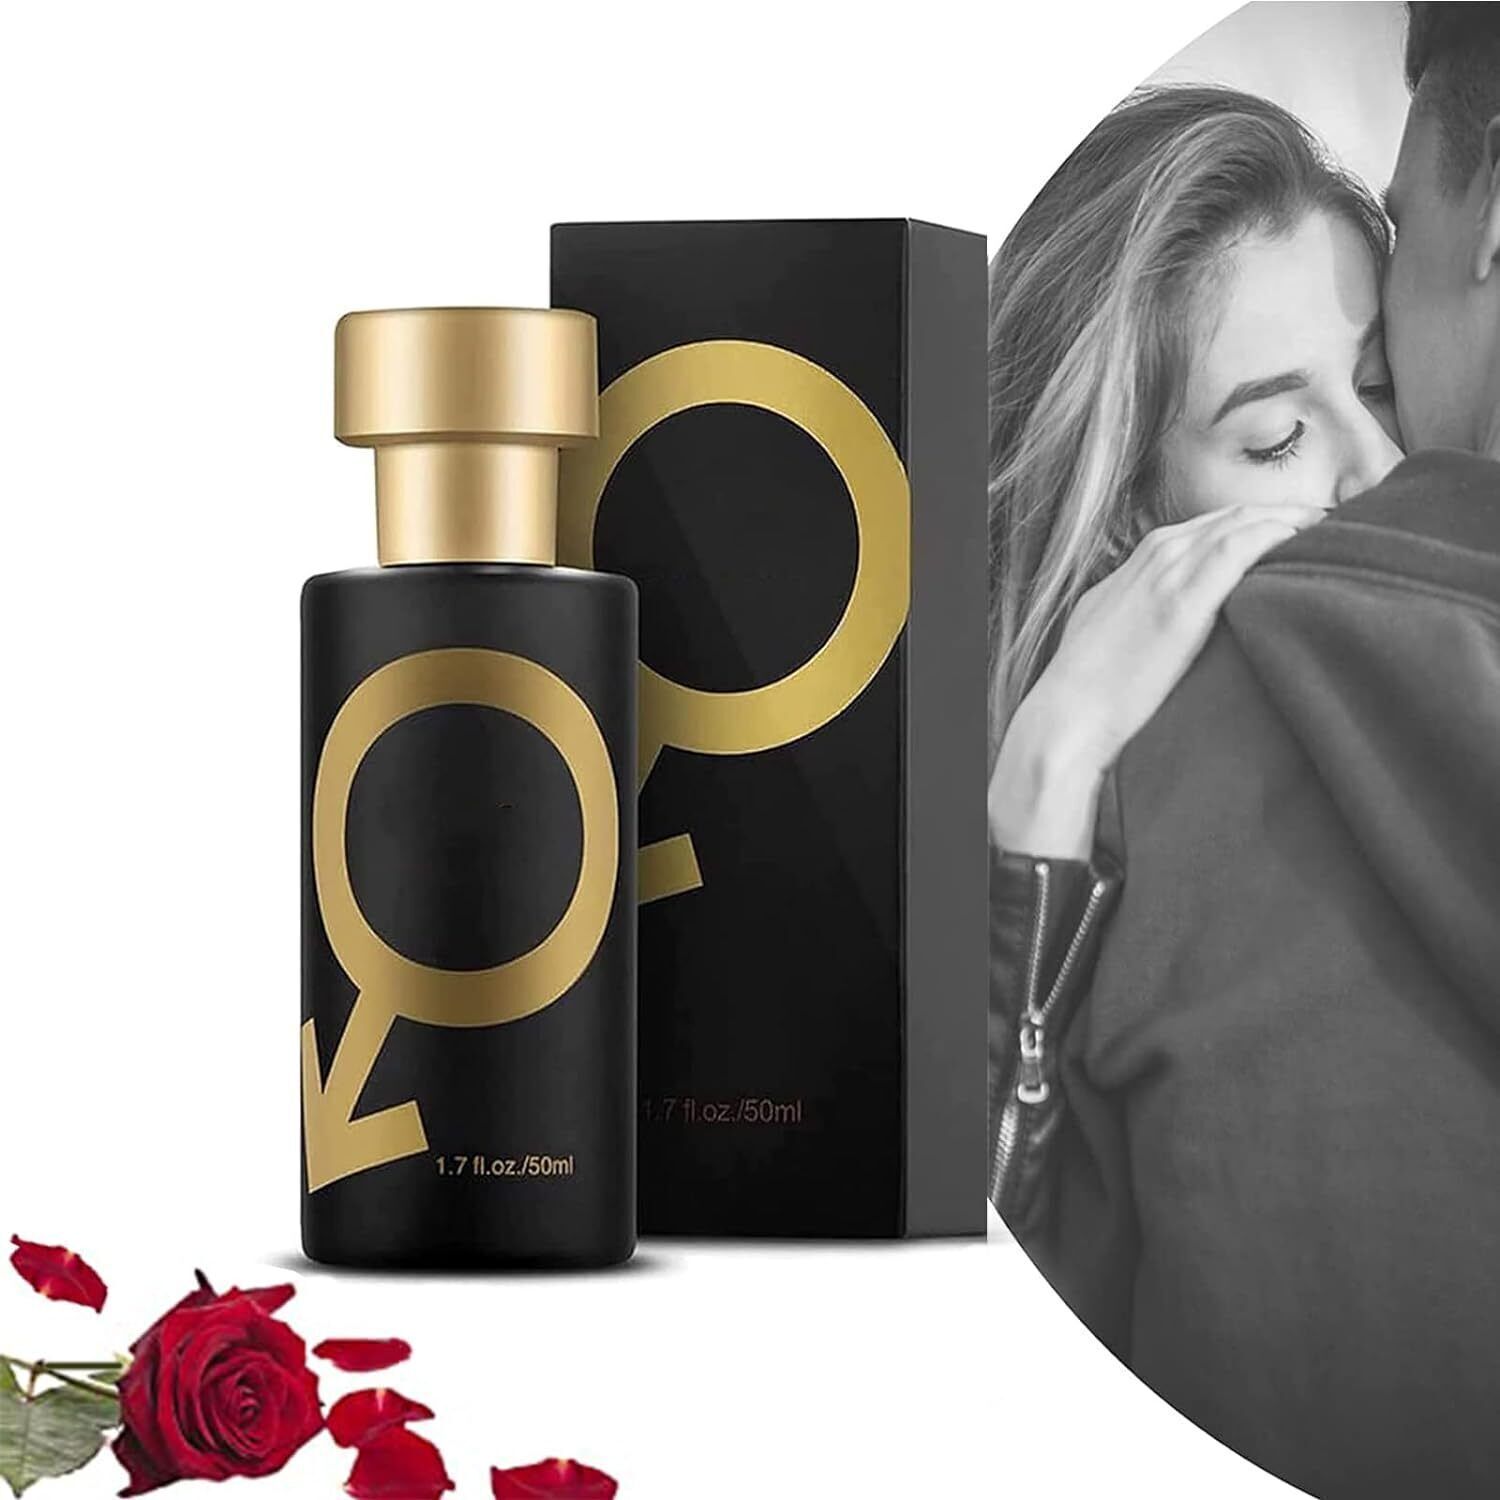 Lure Her Perfume Attract Spray Pheromones For Him/Her Men Women Birth Gift